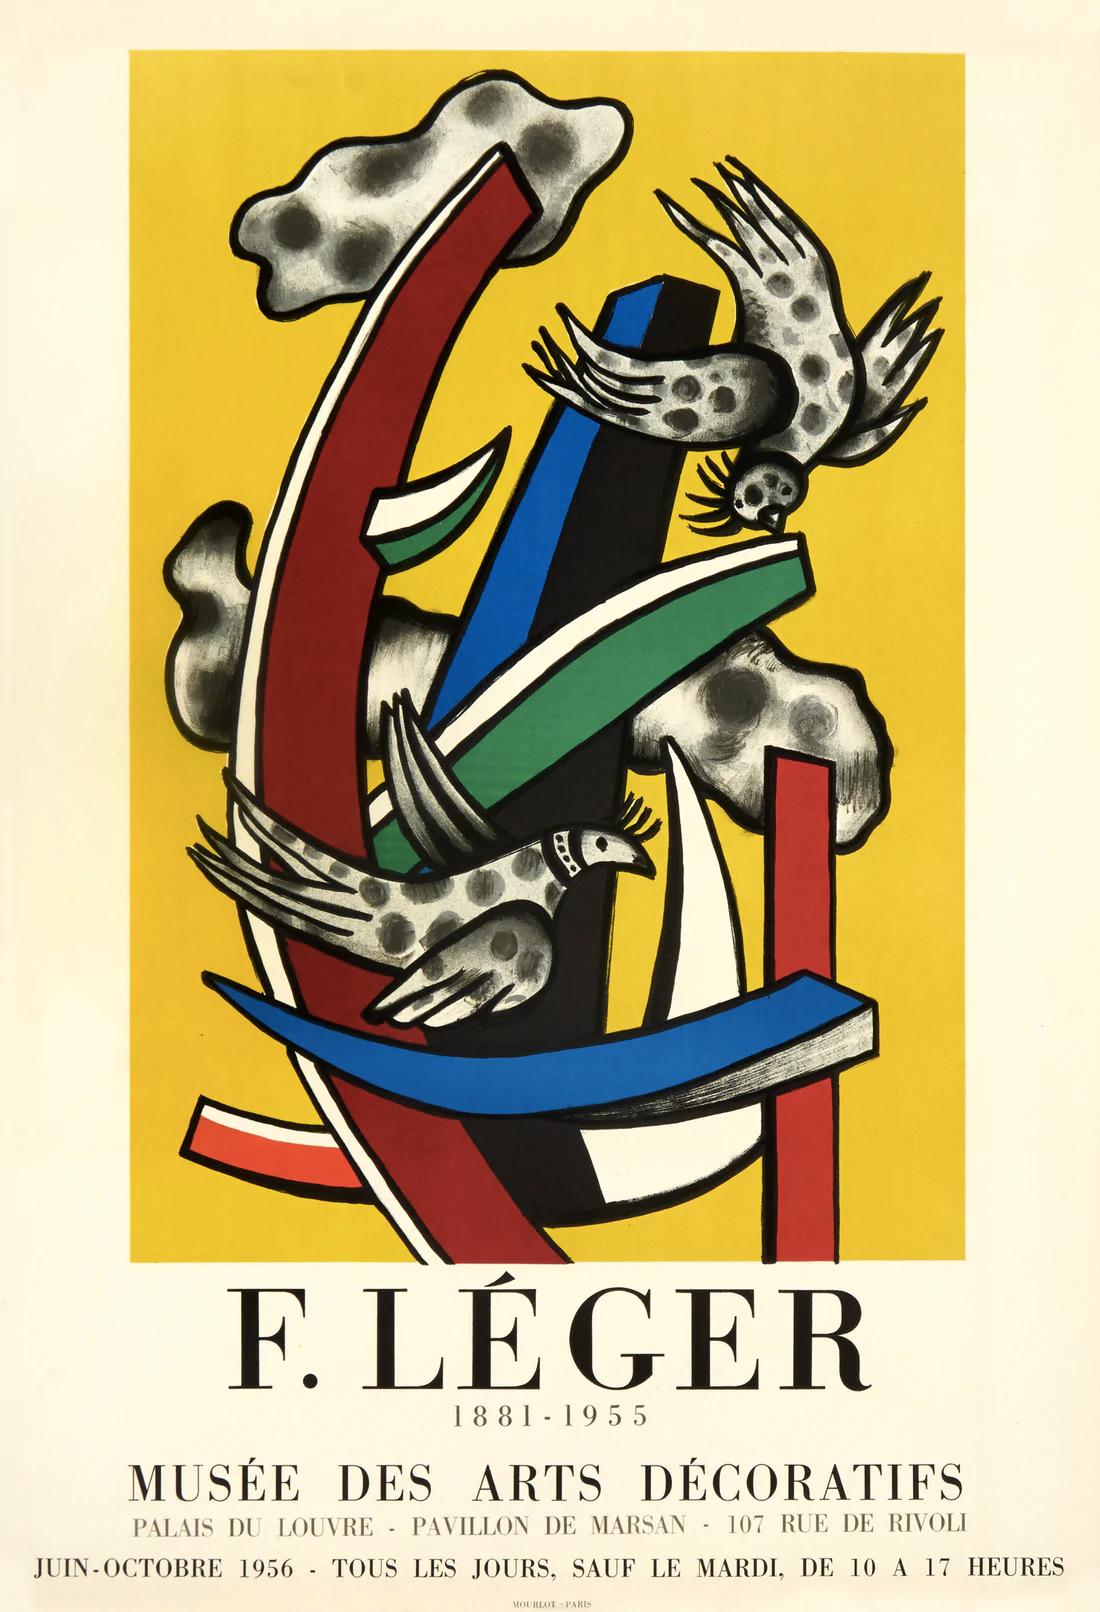 Musée des Arts Décoratifs par Fernand Leger, 1956 - Print de Fernand Léger